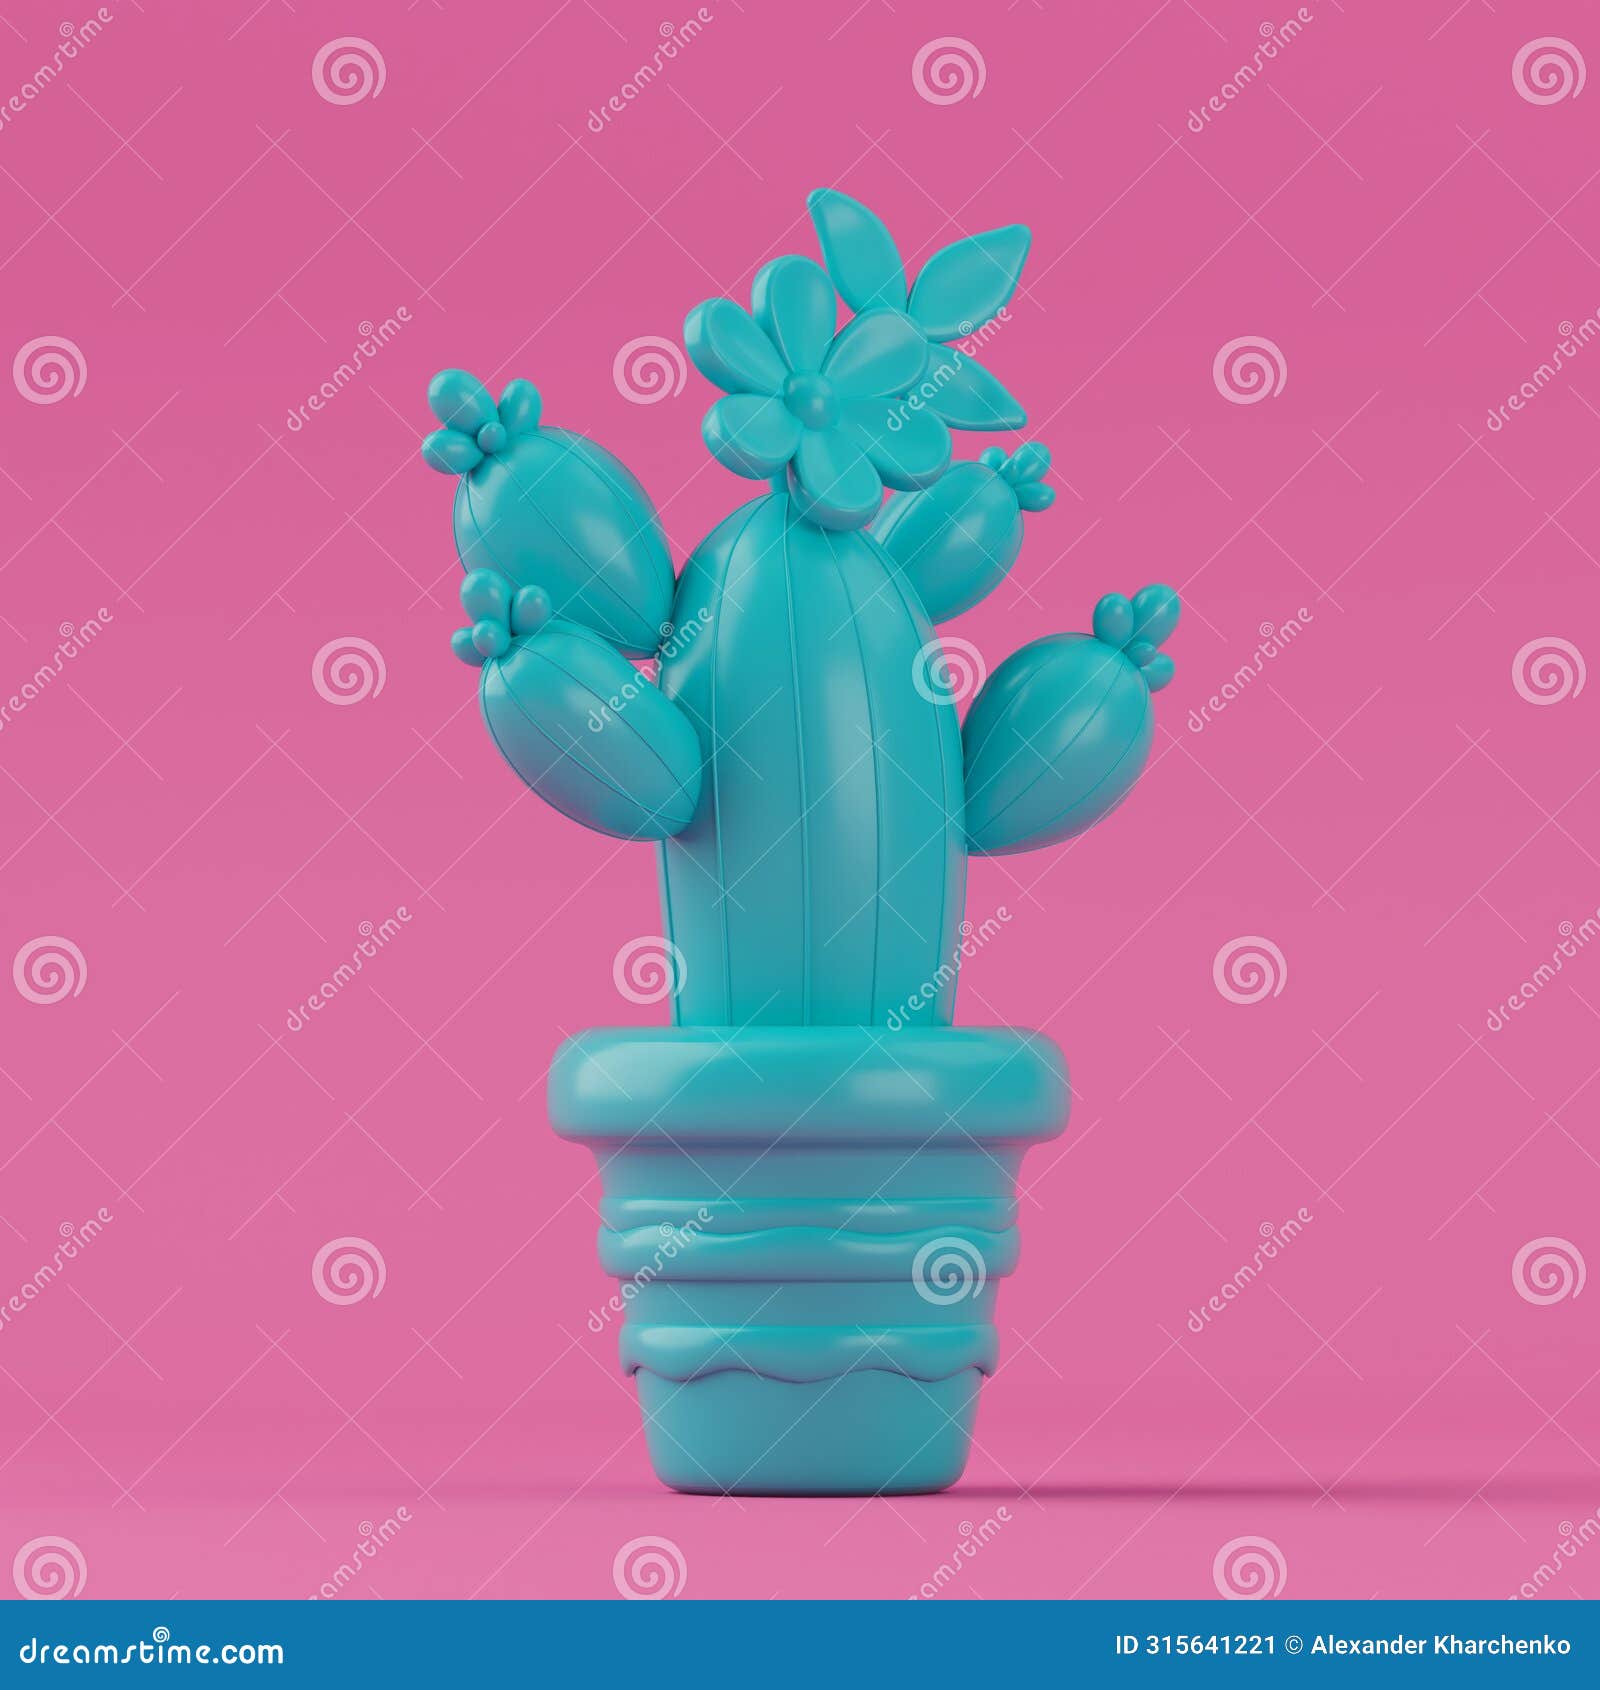 cute cartoon blue cactus in duotone style. 3d rendering